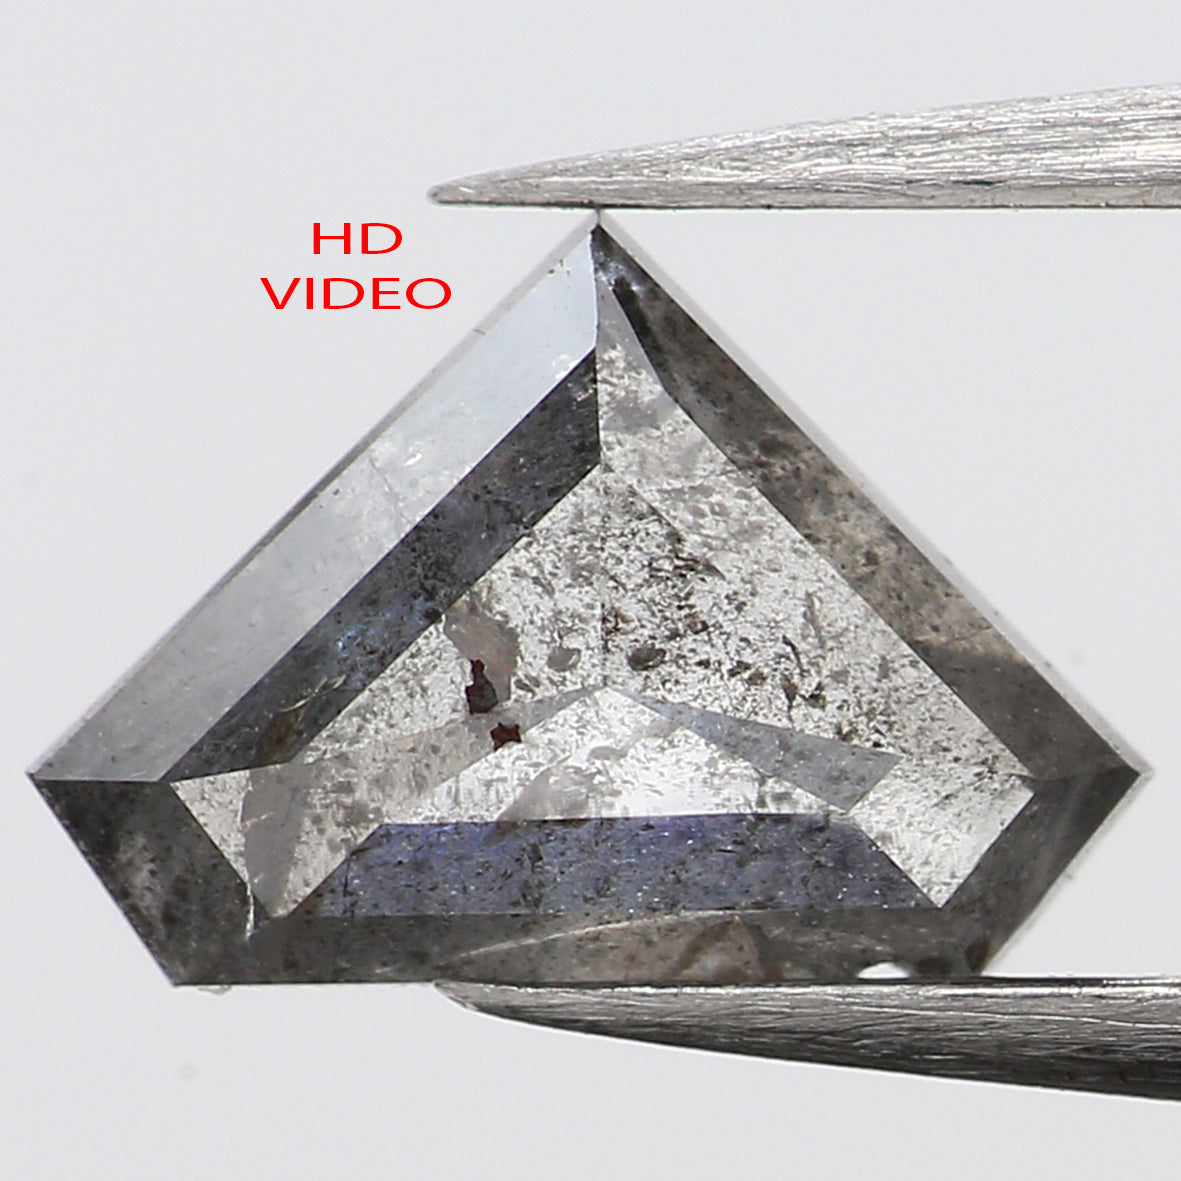 0.77 Ct Natural Loose Shield Shape Diamond Salt And Pepper Shield Cut Diamond 5.25 MM Black Gray Color Shield Shape Rose Cut Diamond QL441